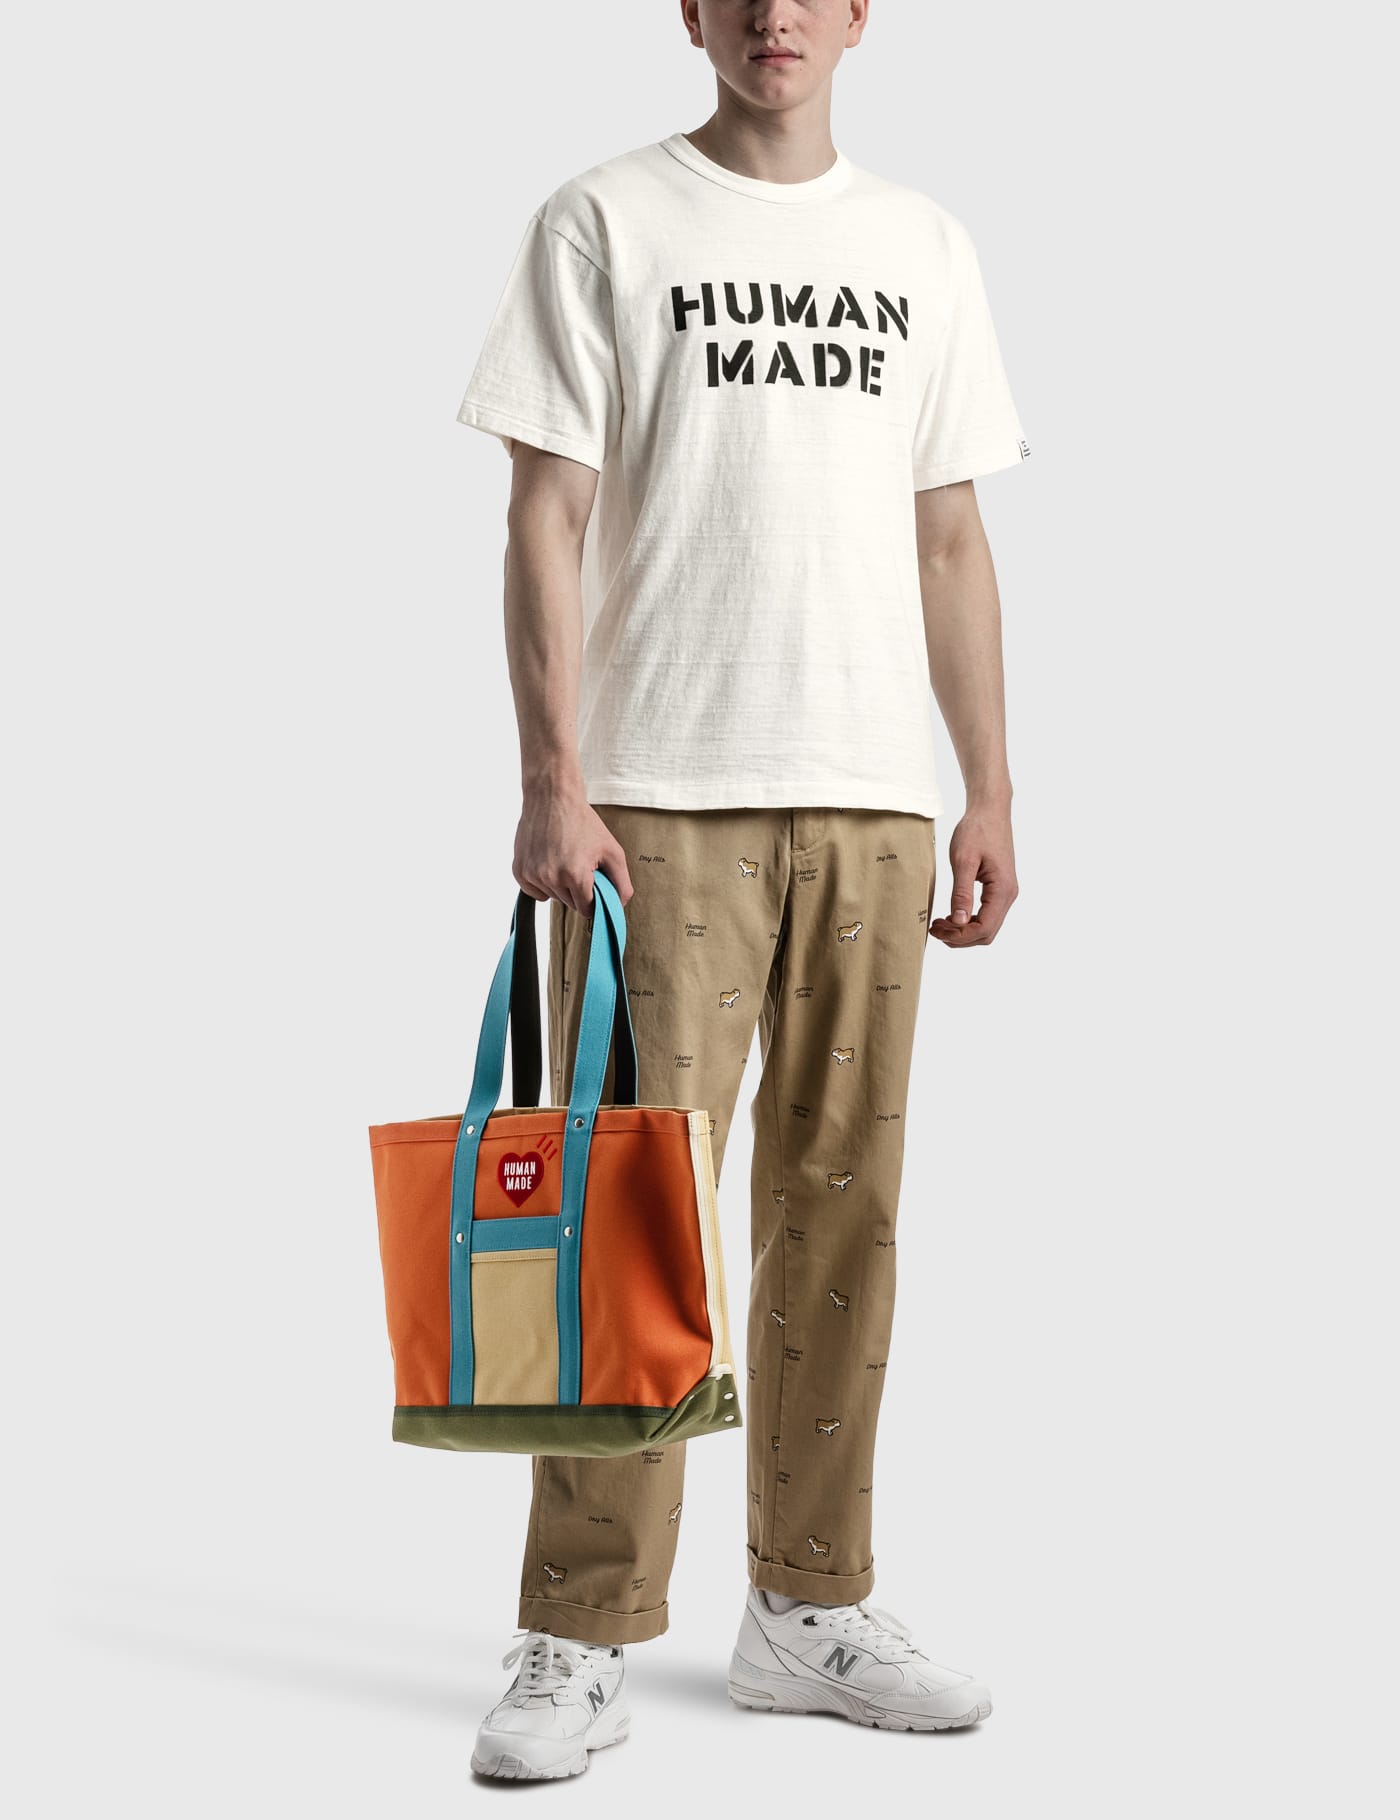 Human Made - Multi-Color Tote Bag - Medium | HBX - Globally 